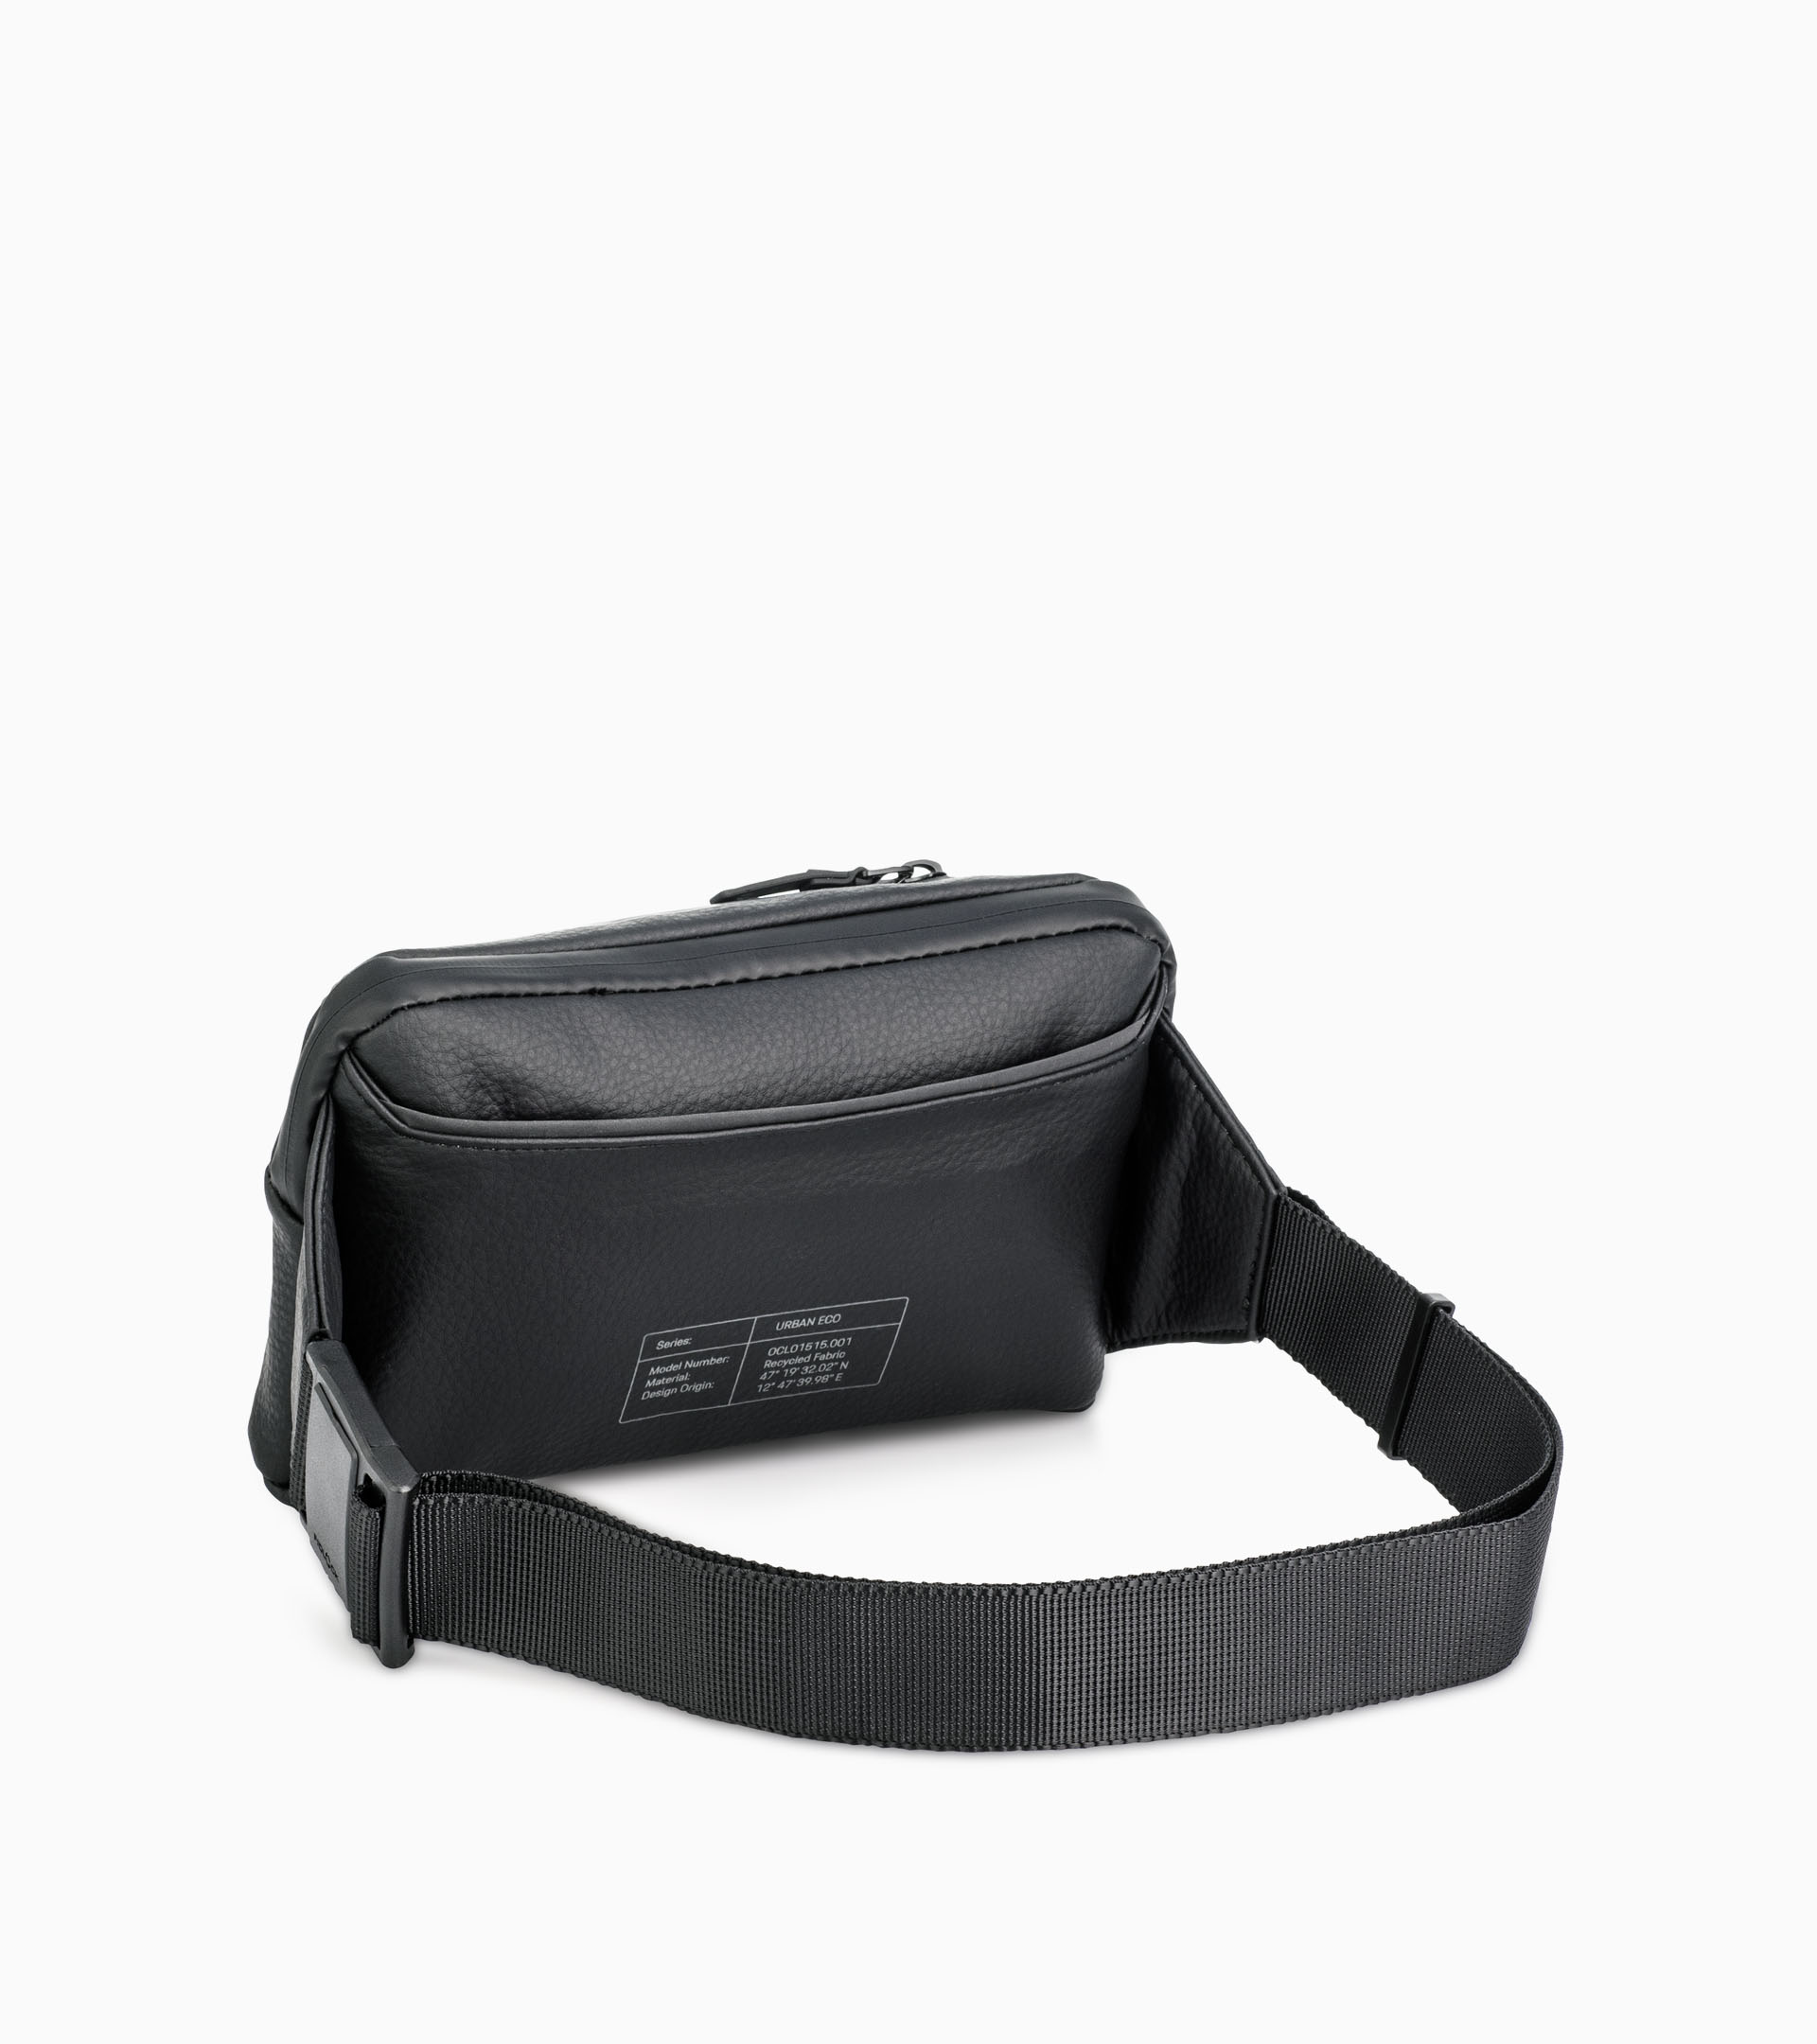 Urban Eco RL Practical - Shoulder Bag & Porsche Belt Comfortable - Design Bag | Porsche Men\'s | Design black